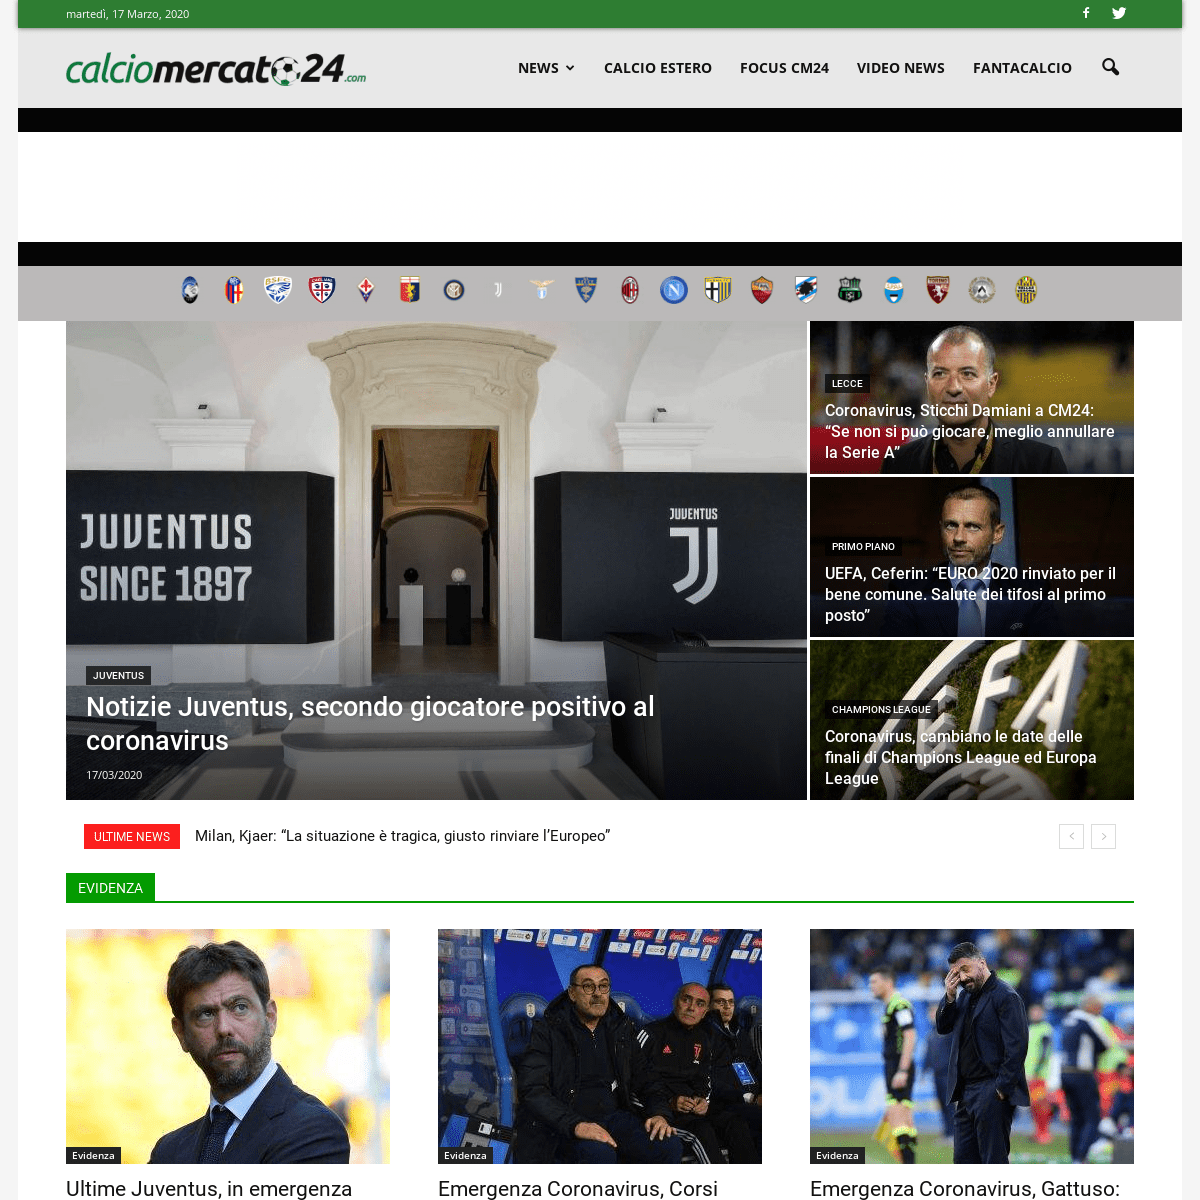 A complete backup of calciomercato24.com